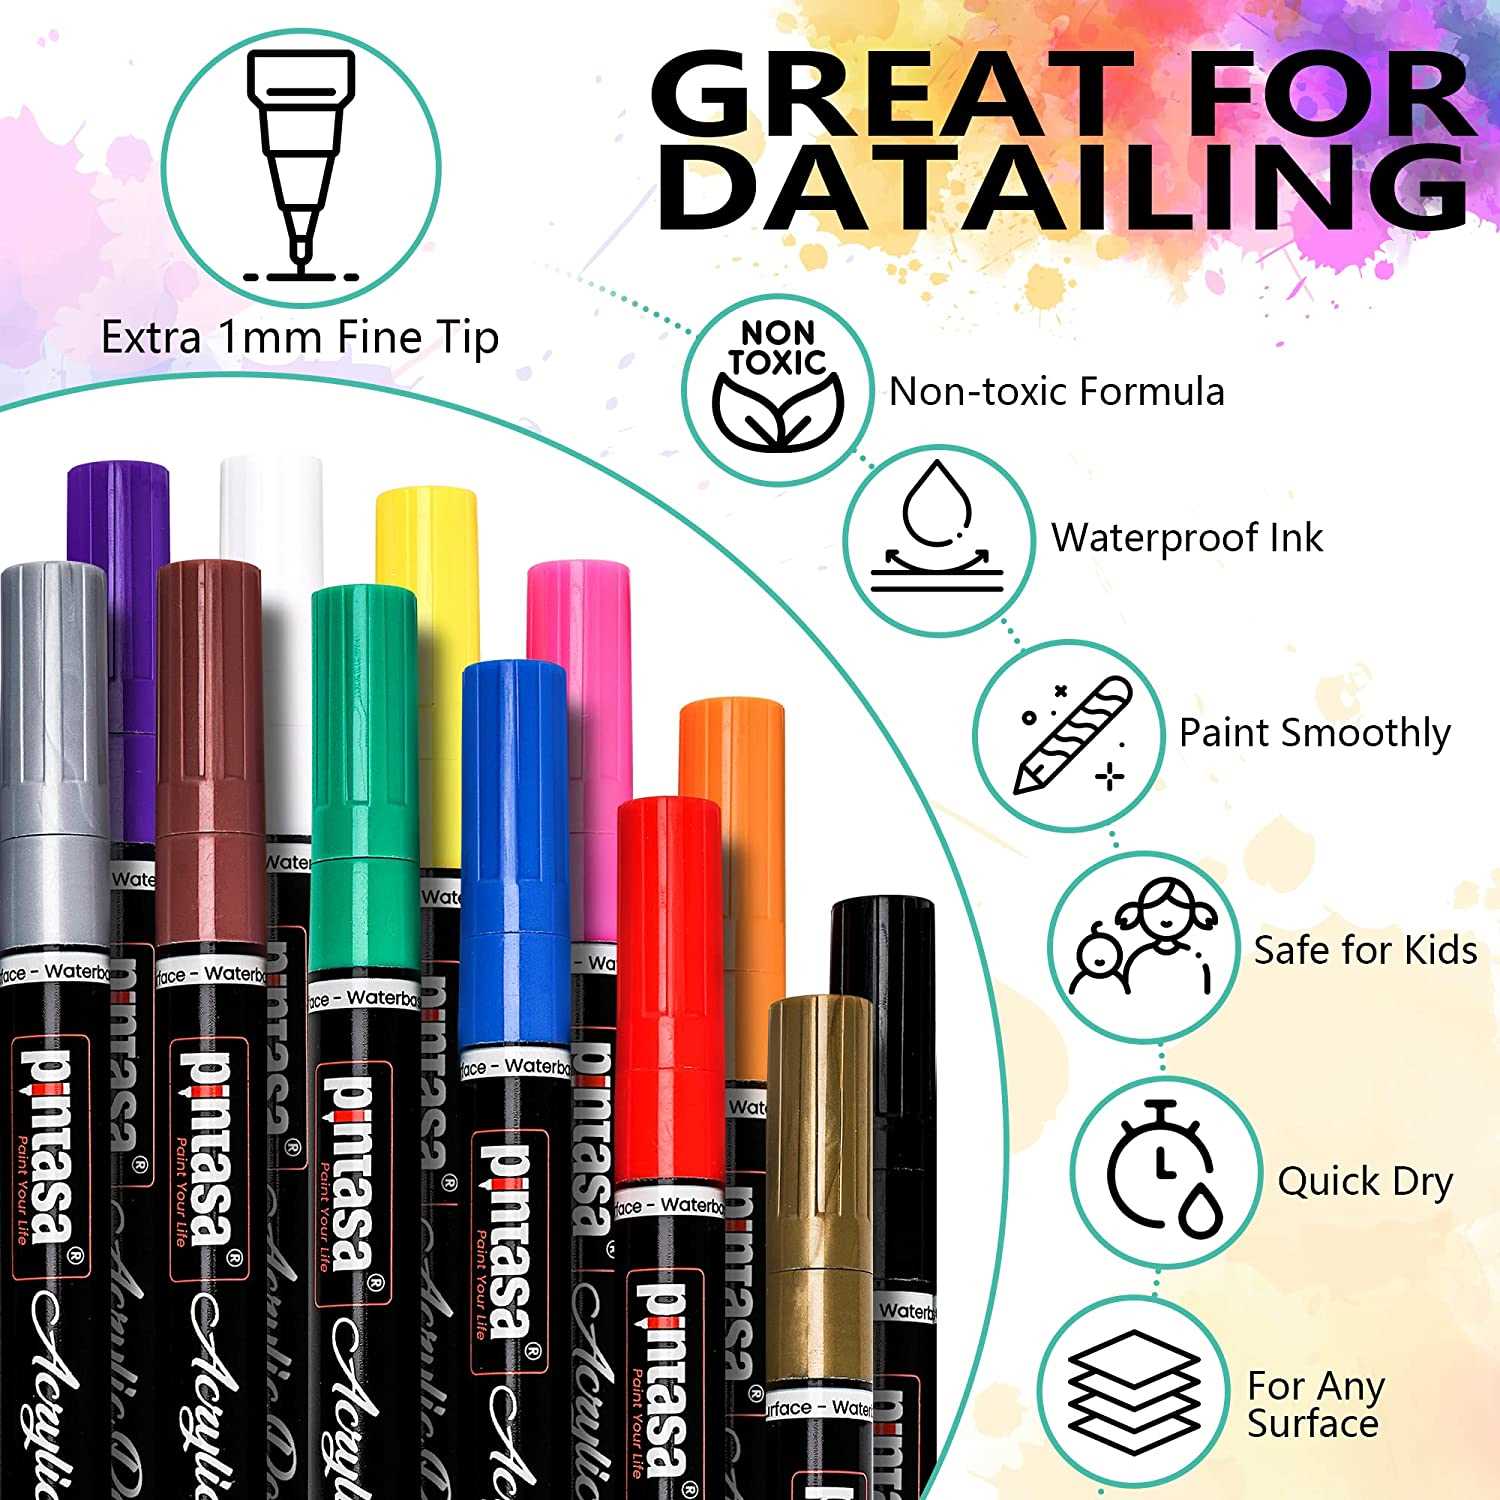 Pintasa Premium Acrylic Paint Pens | Extra Fine 0.7mm-1mm